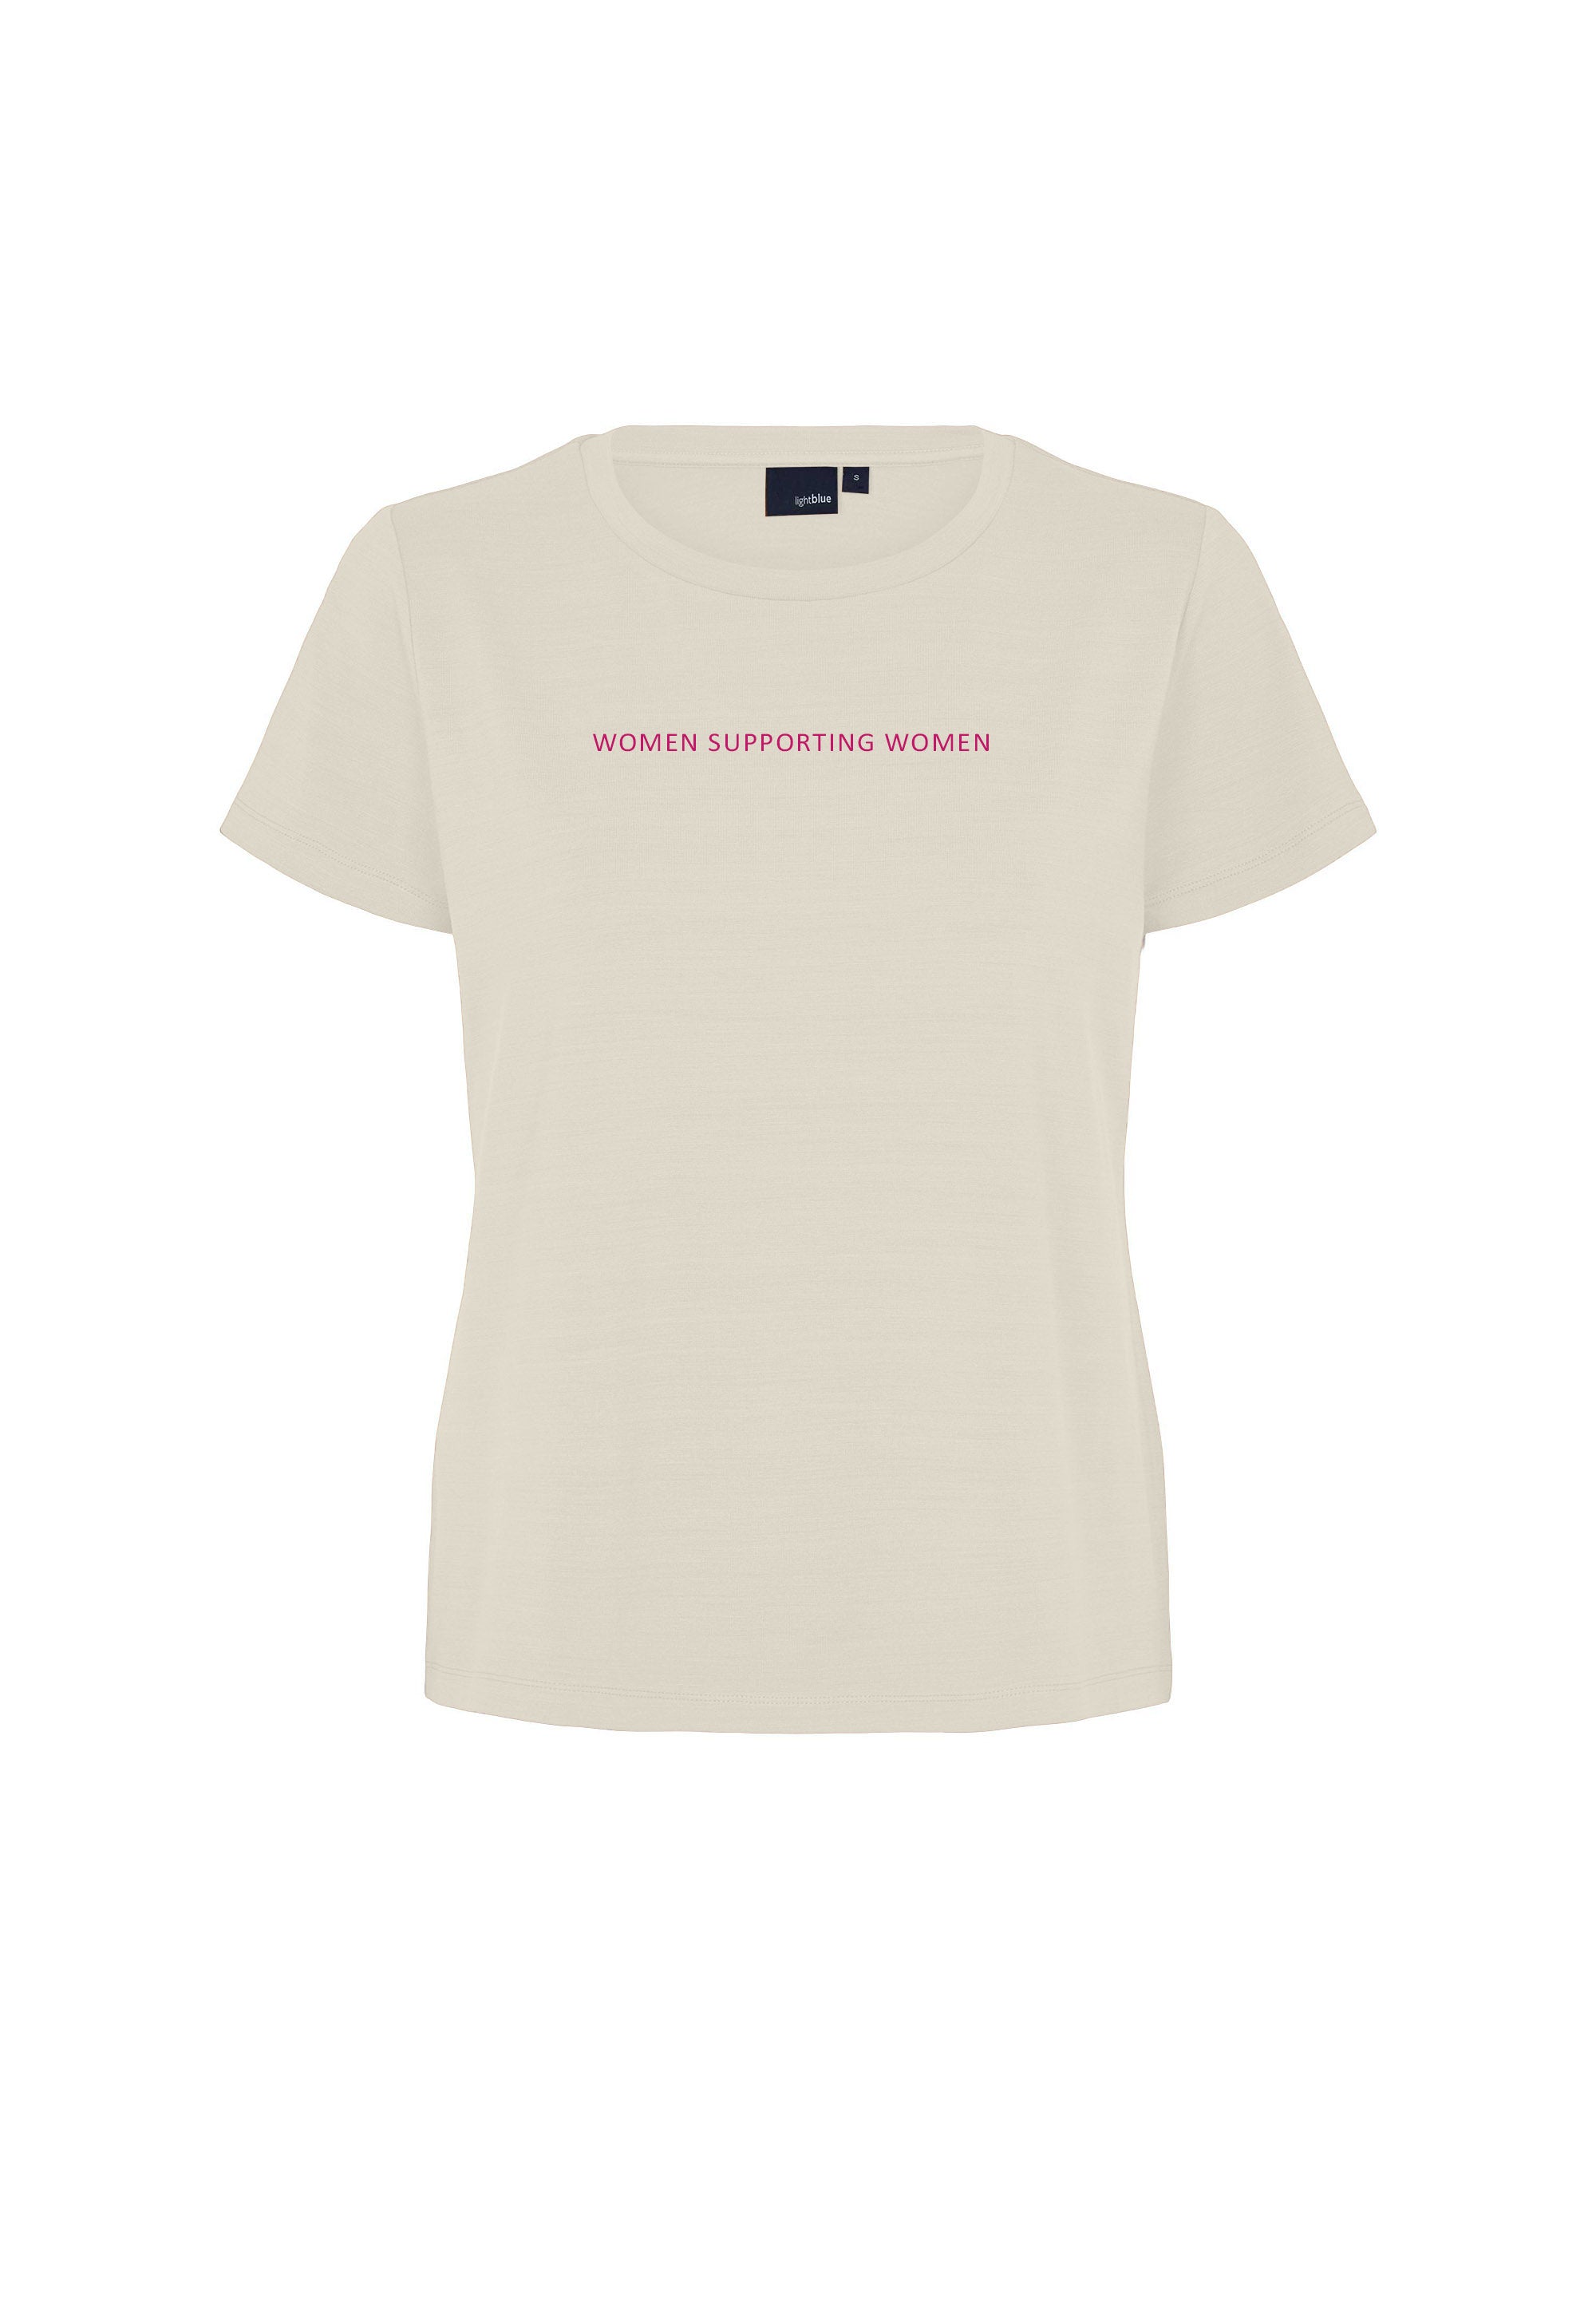 LAURIE International Women's Day T-Shirt T-Shirts Pink Print